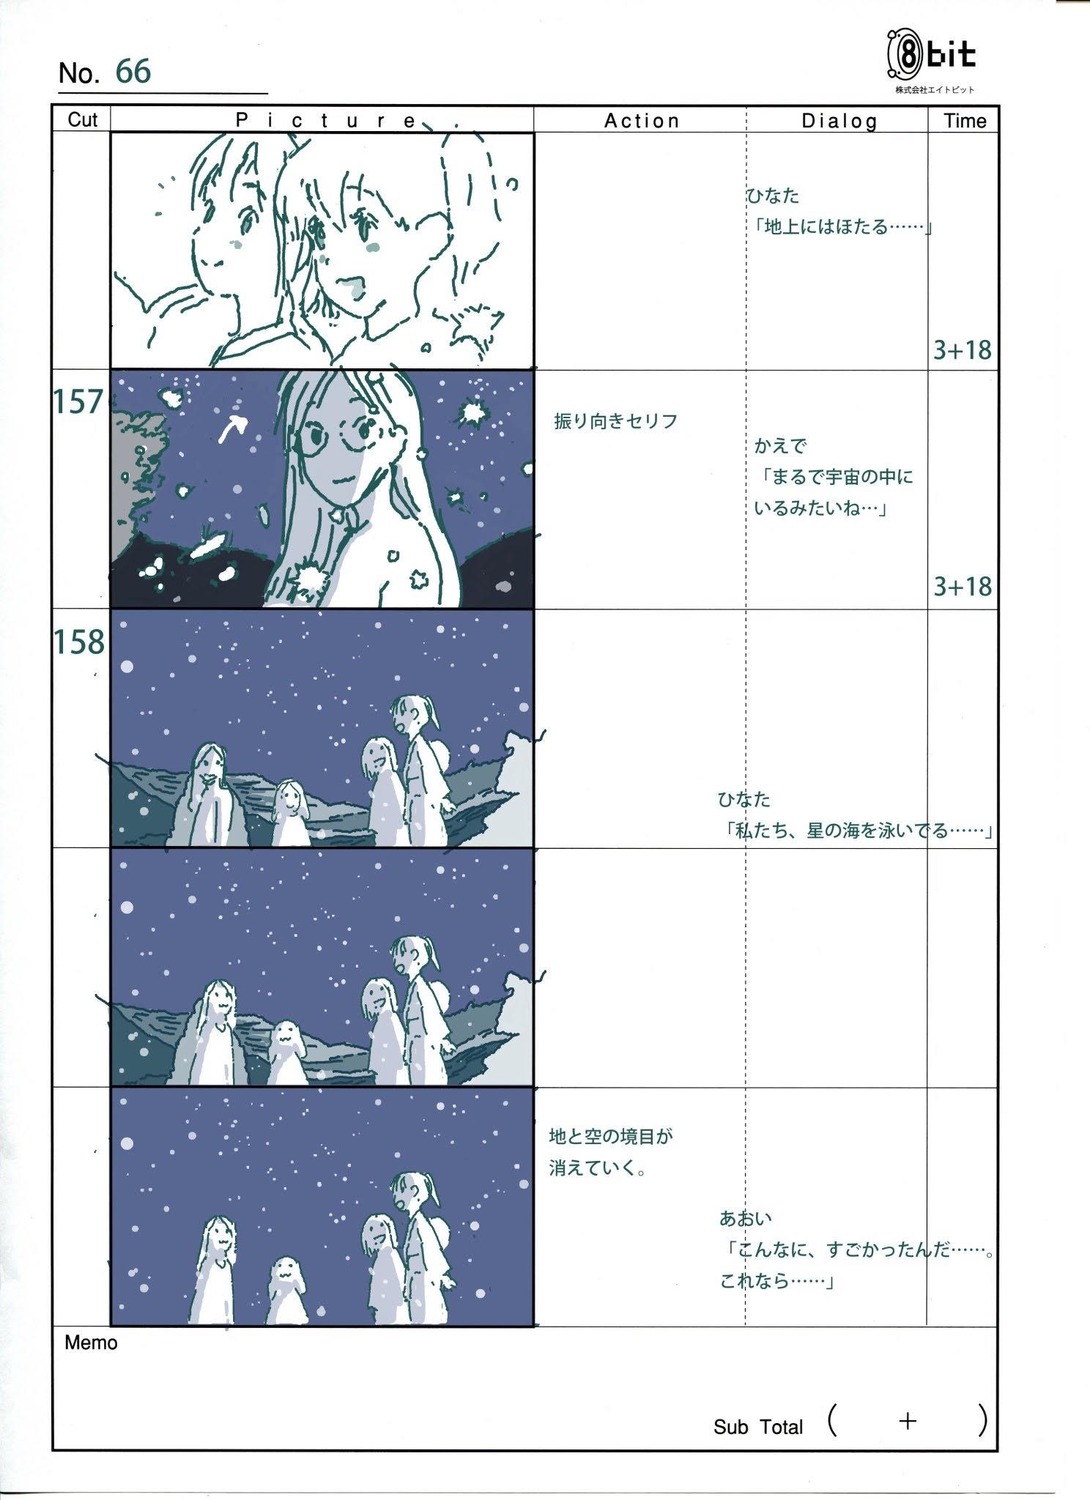 kazuyoshi_yaginuma production_materials storyboard yama_no_susume:_second_season yama_no_susume_series